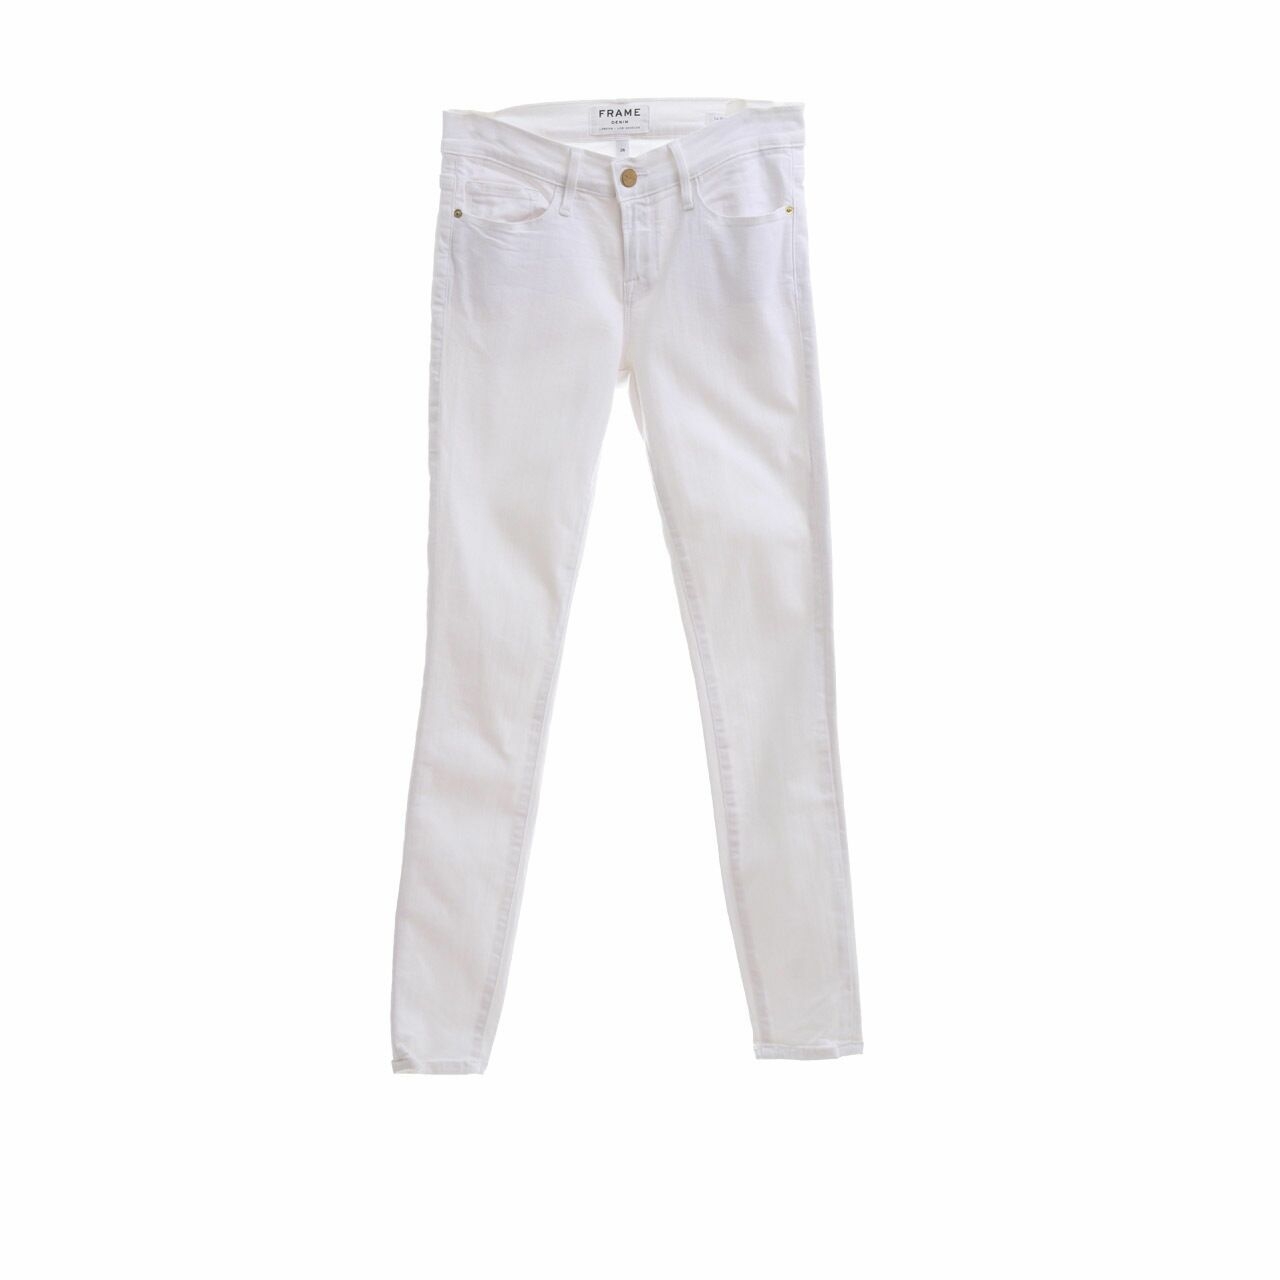 Frame White Long Pants